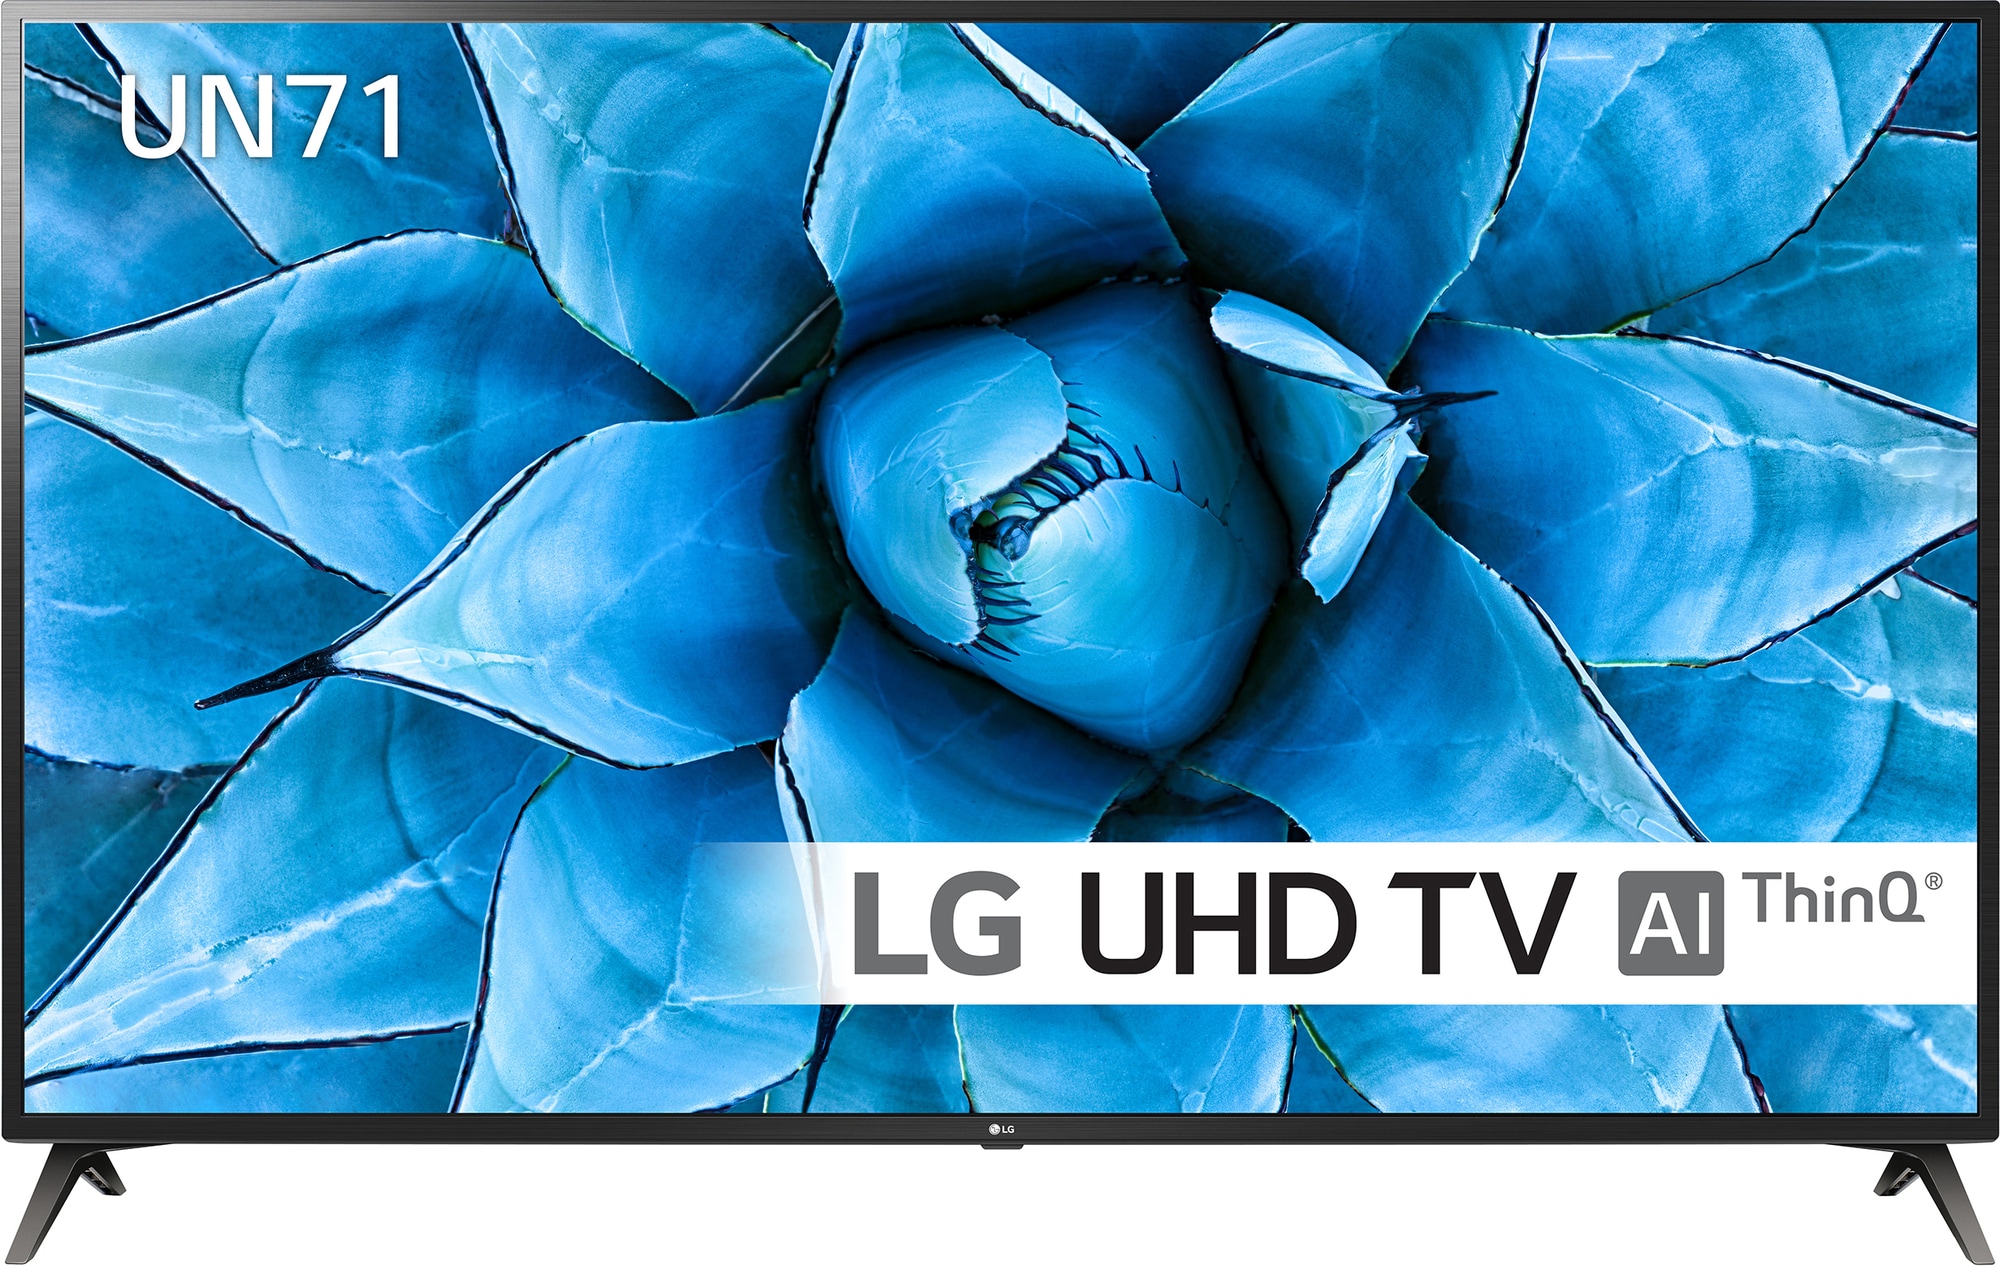 LG 70" UN71 4K UHD Smart TV 70UN7100 (2020) - Elgiganten